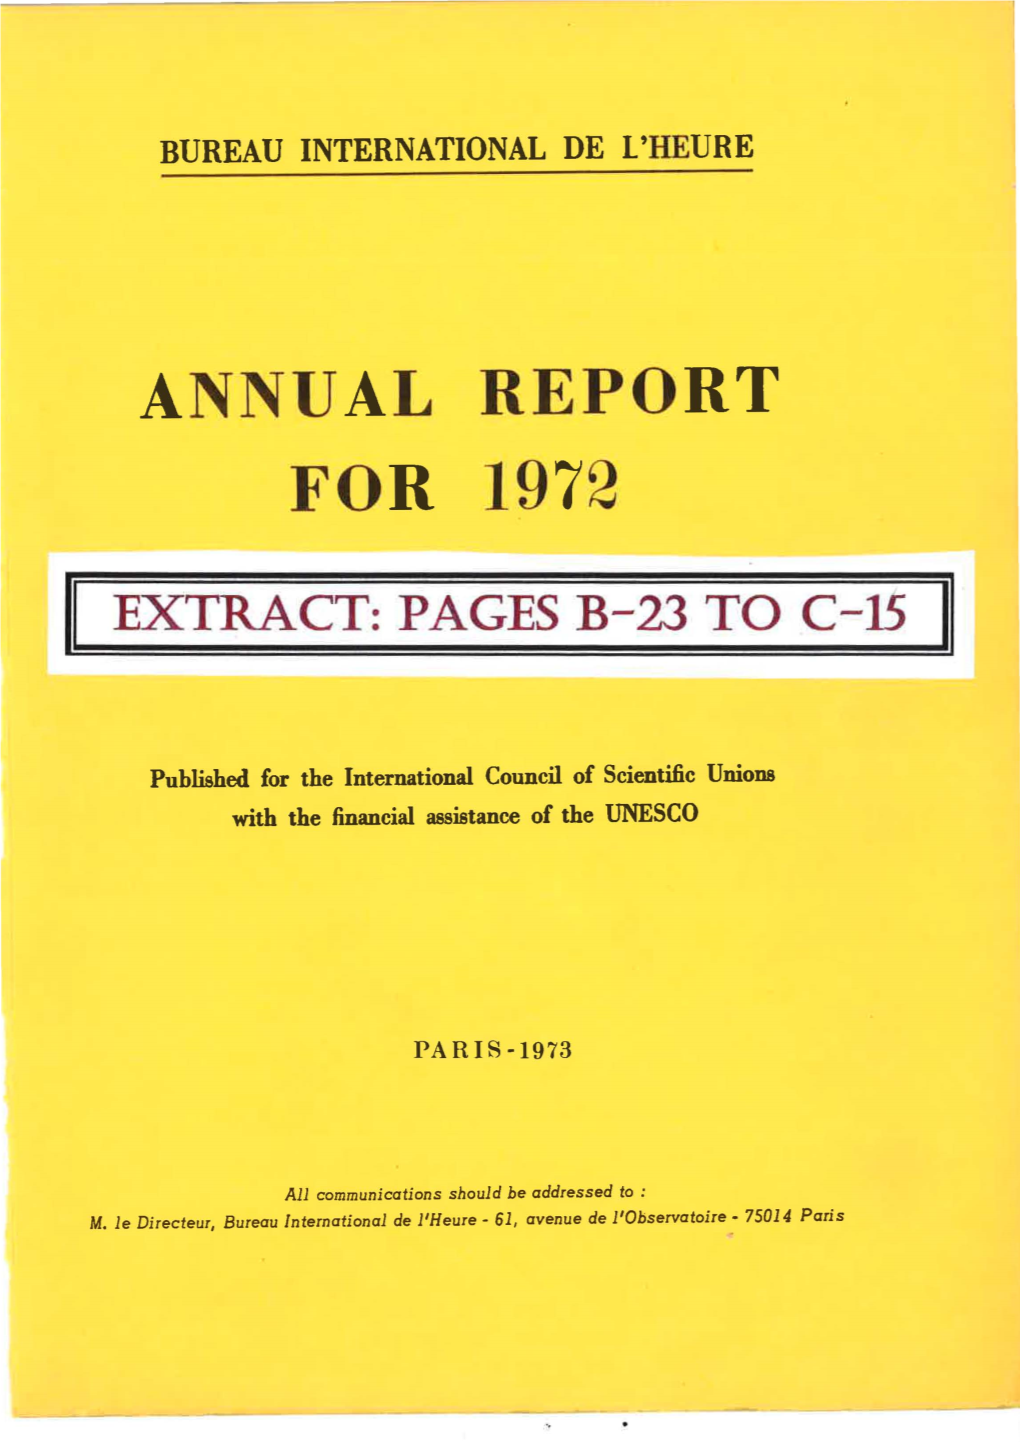 BIH Annual Report for 1972